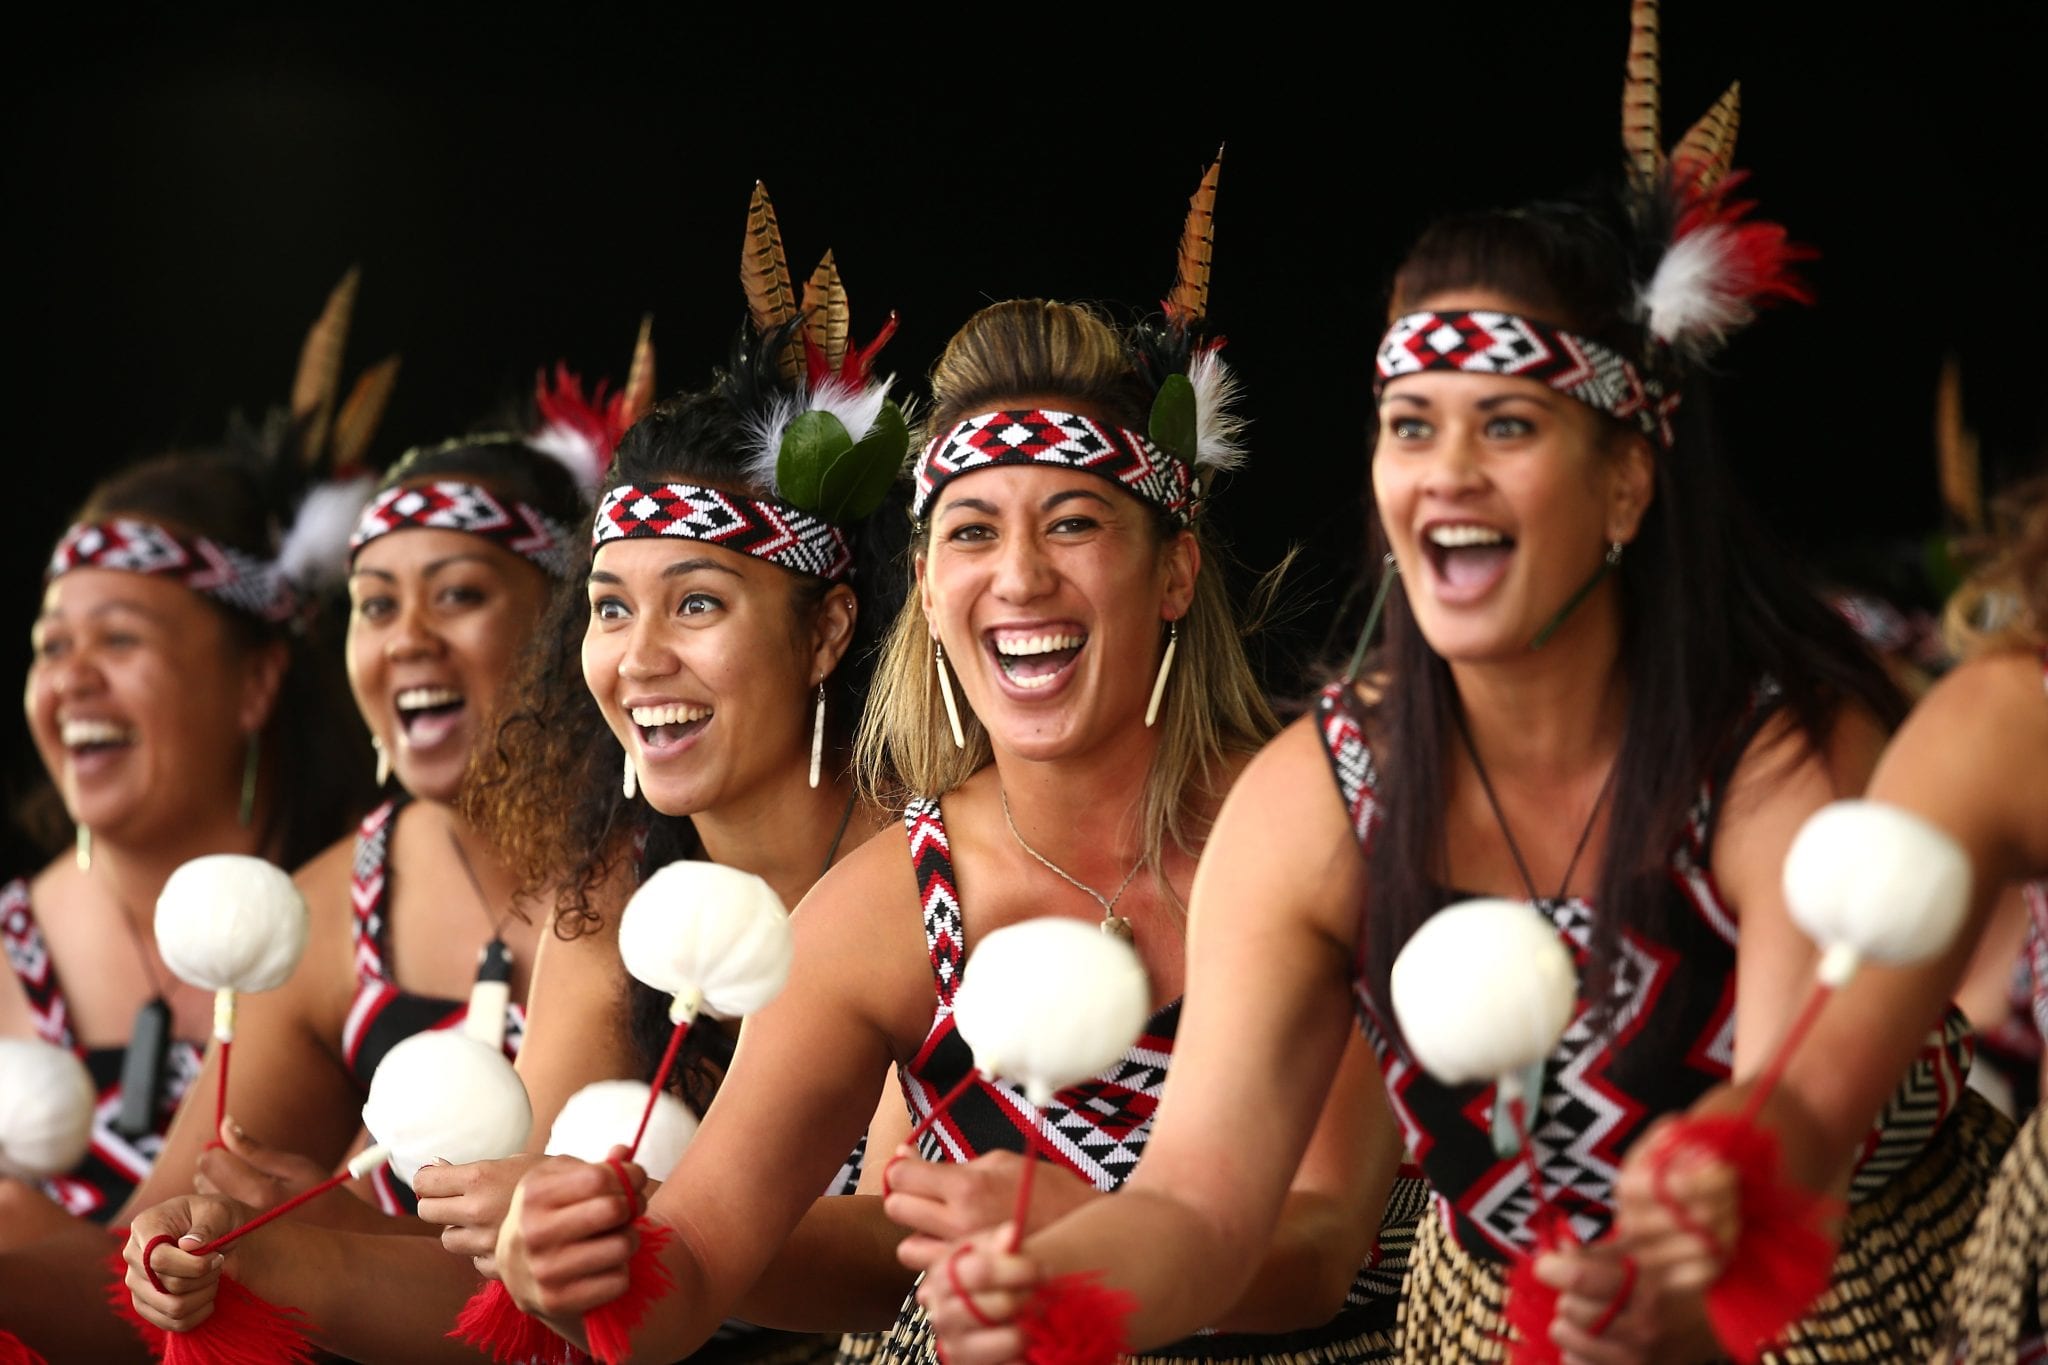 The Maori Song (waiata)